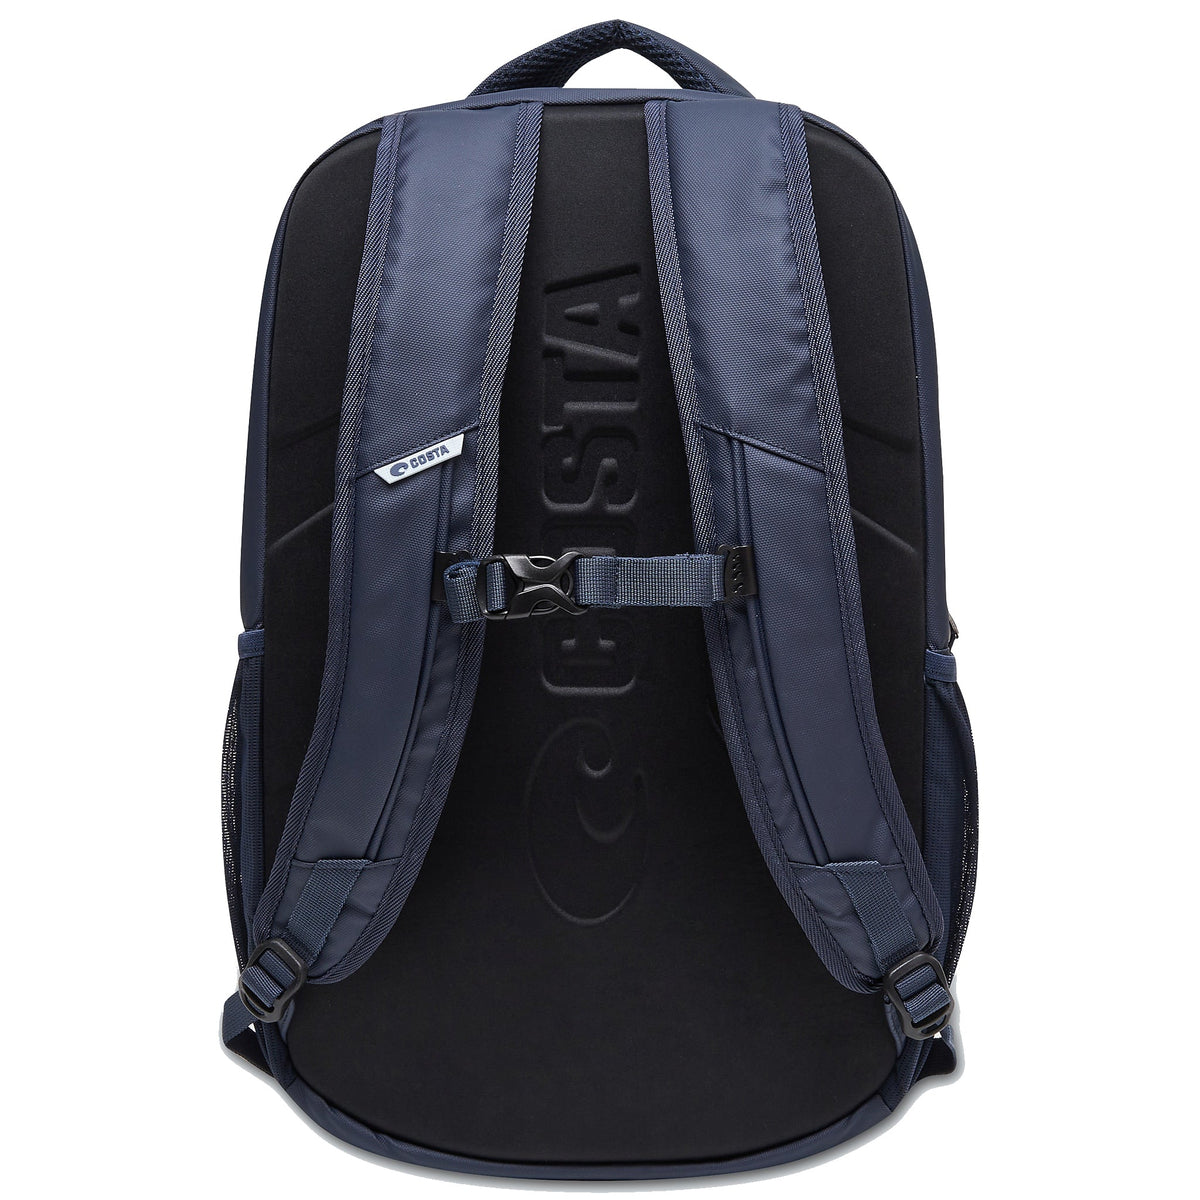 Costa 25L Backpack